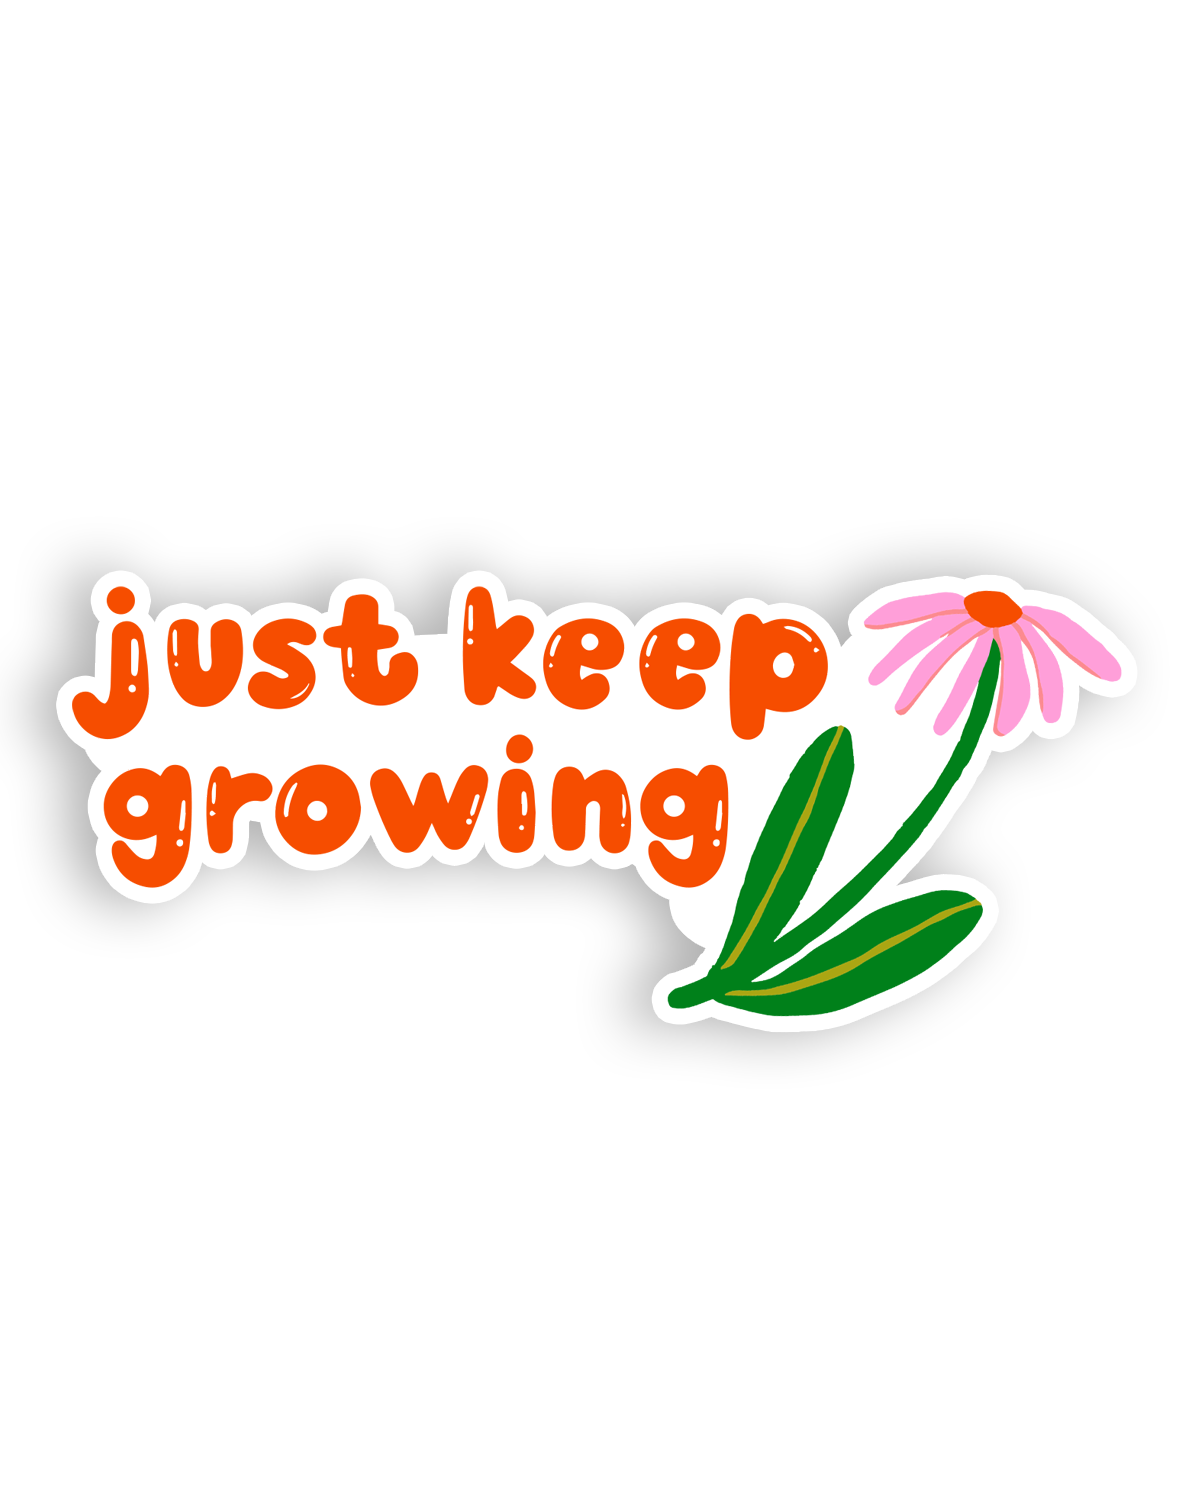 Just Keep Growing Flower Sticker